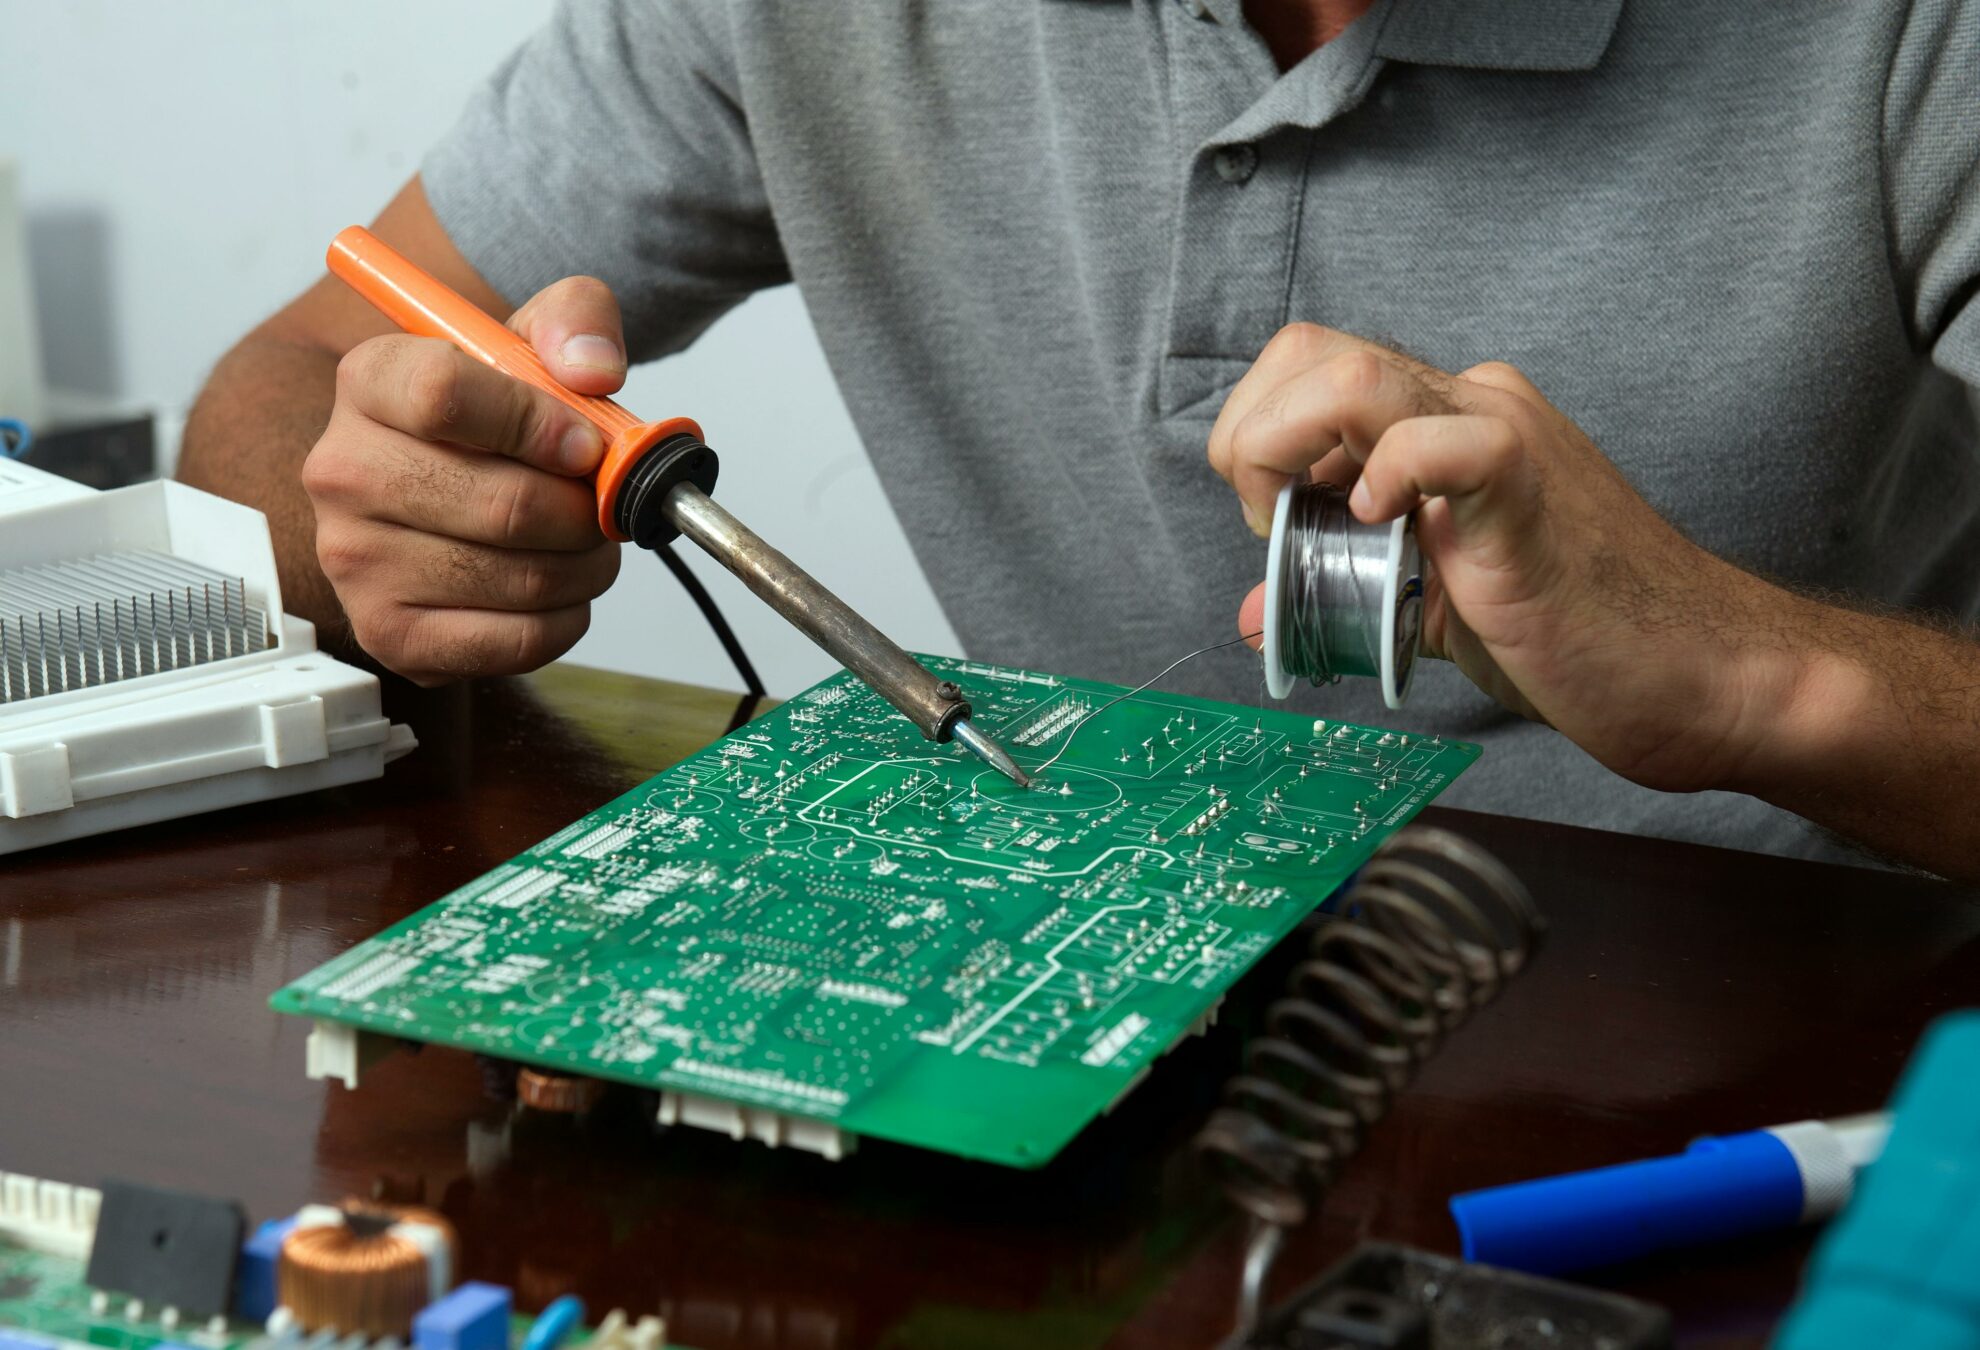 A technician repairing a circuit board in gym equipment.